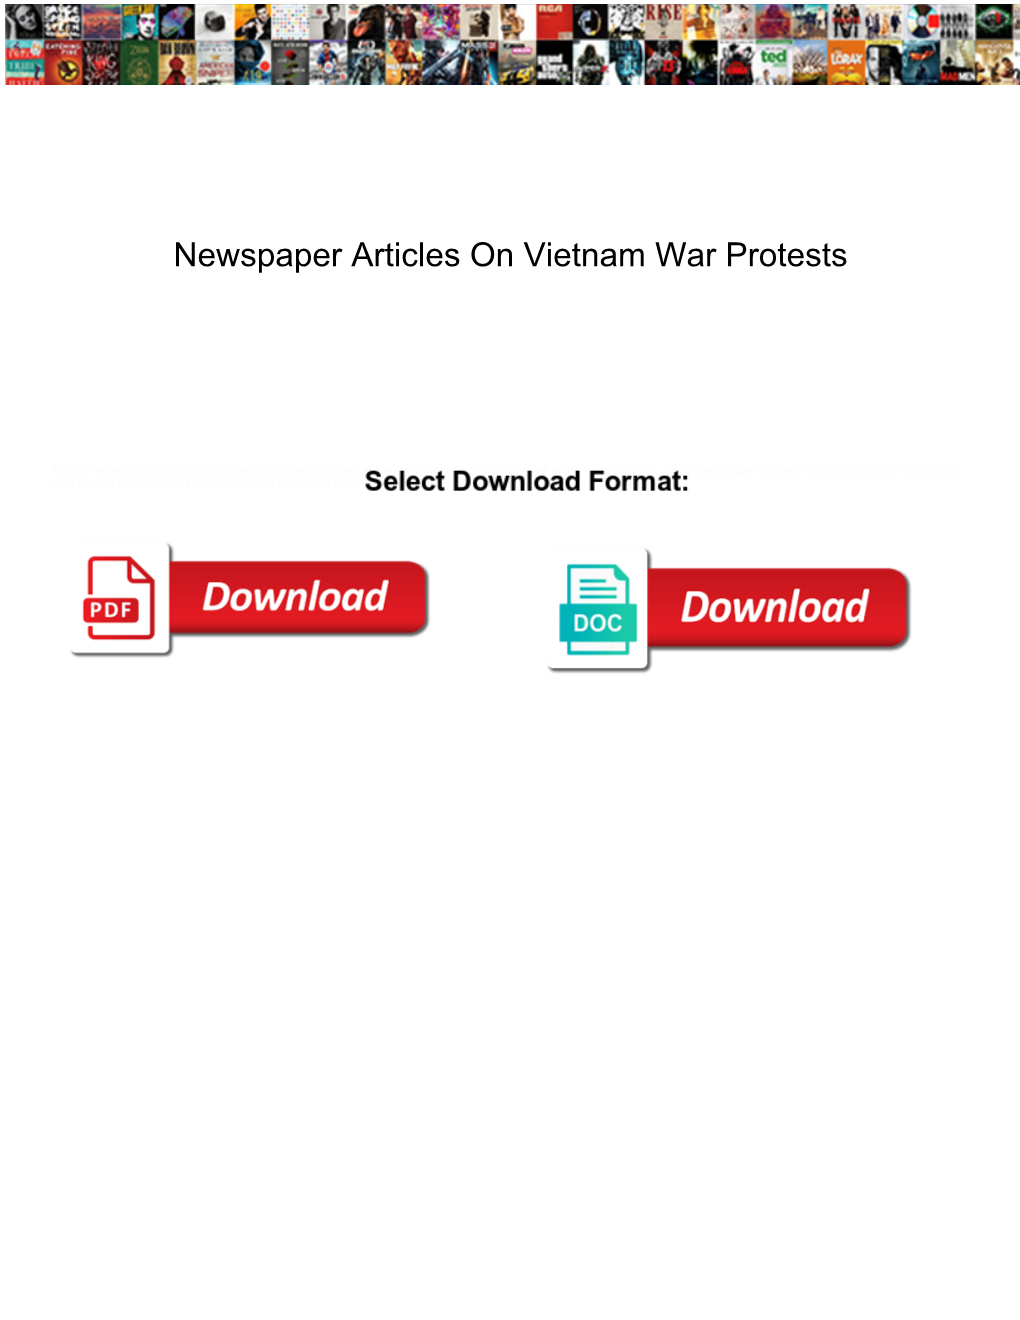 Newspaper Articles on Vietnam War Protests